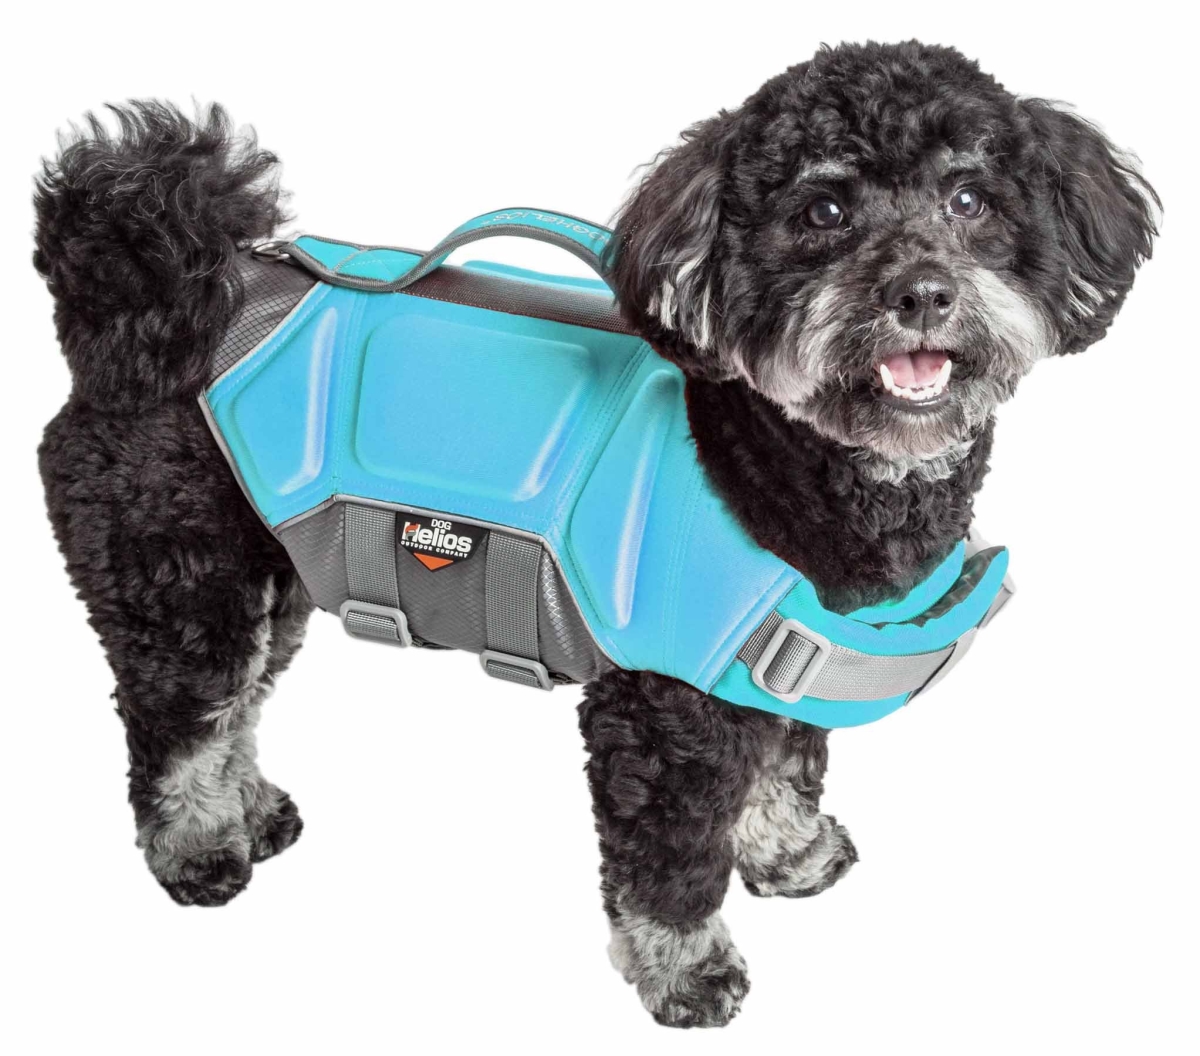 Ha18lbxl Tidal Guard Multi-point Strategically-stitched Reflective Pet Dog Life Jacket Vest - Light Blue, Extra Large